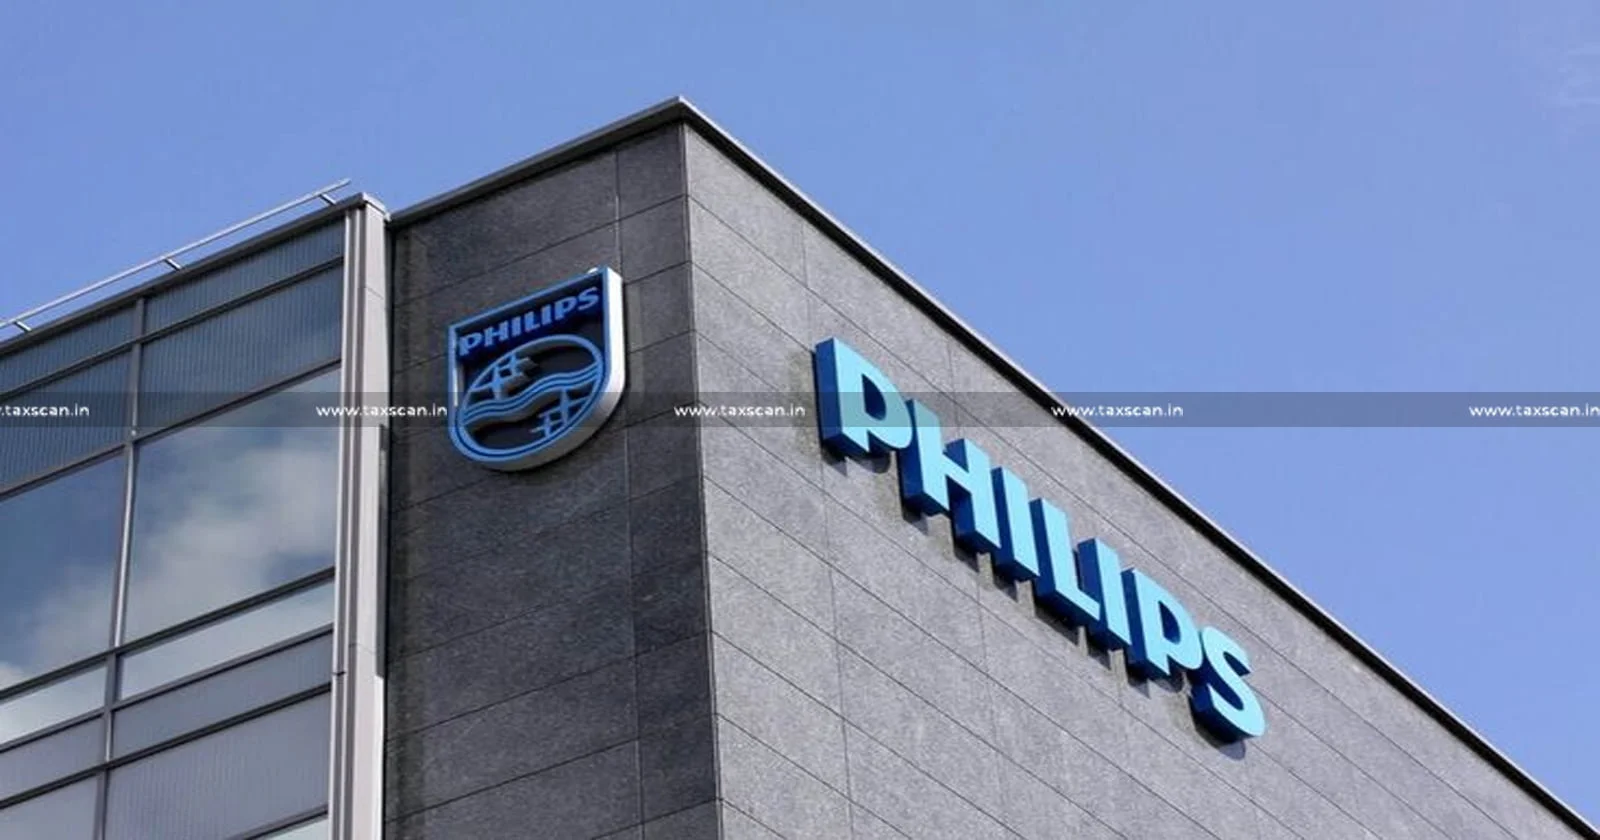 CA Vacancy in Philips - MBA Vacancy in Philips - CA Vacancy - taxscan